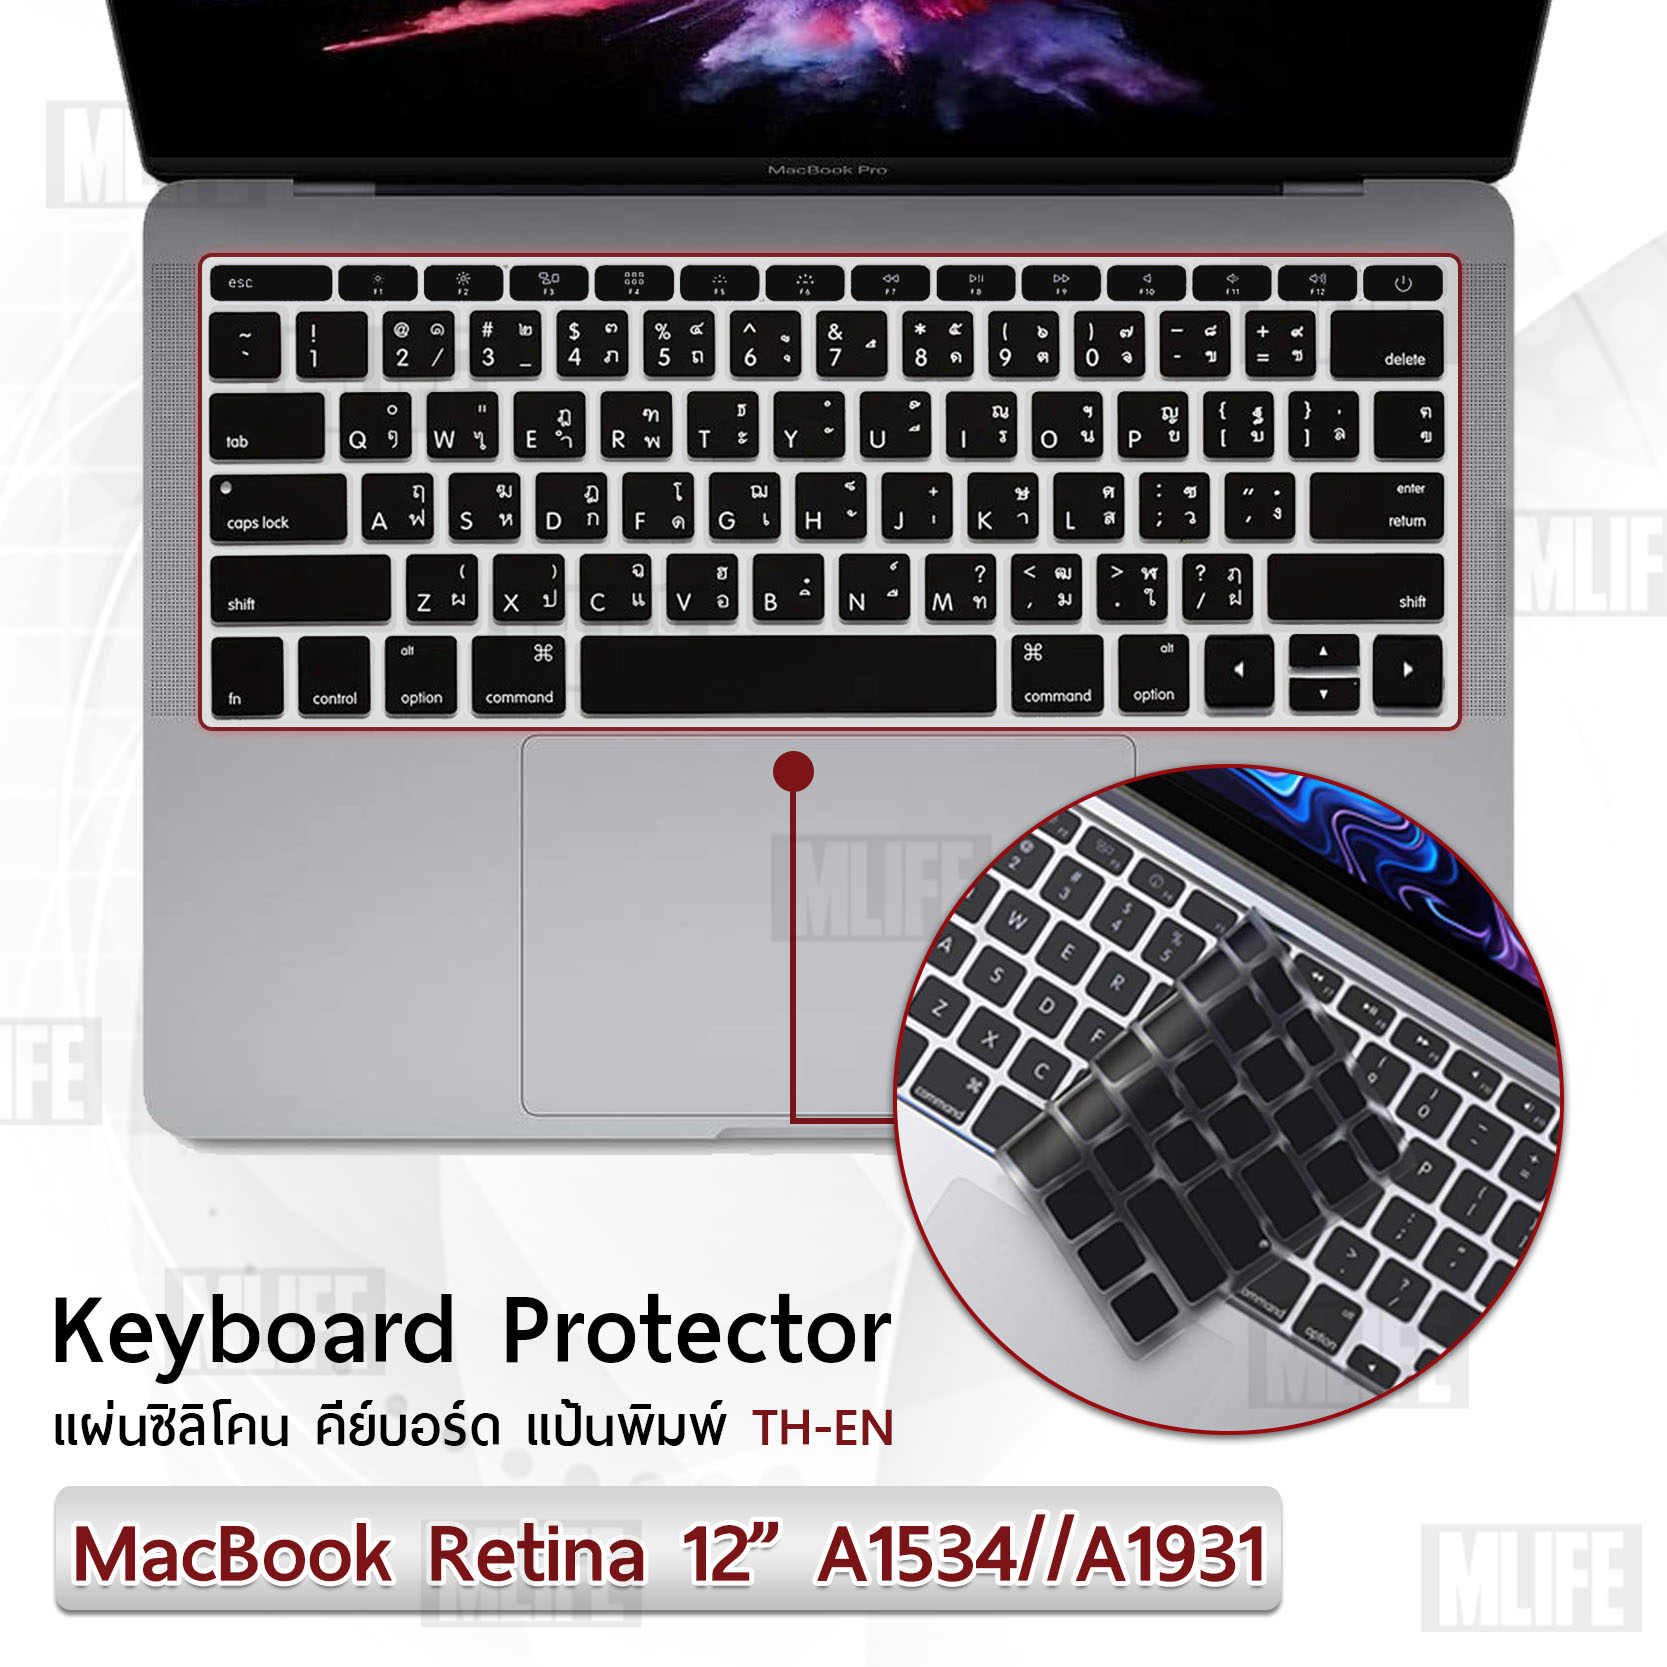 MLIFE - แผ่นซิลิโคน ภาษาไทย New MacBook 12 with Retina Display A1534 A1931 ซิลิโคนรอง คีย์บอร์ด กันฝุ่น - Silicone Keyboard Cover for New MacBook Without Touch Bar A1708 A1988 A1534 A1931